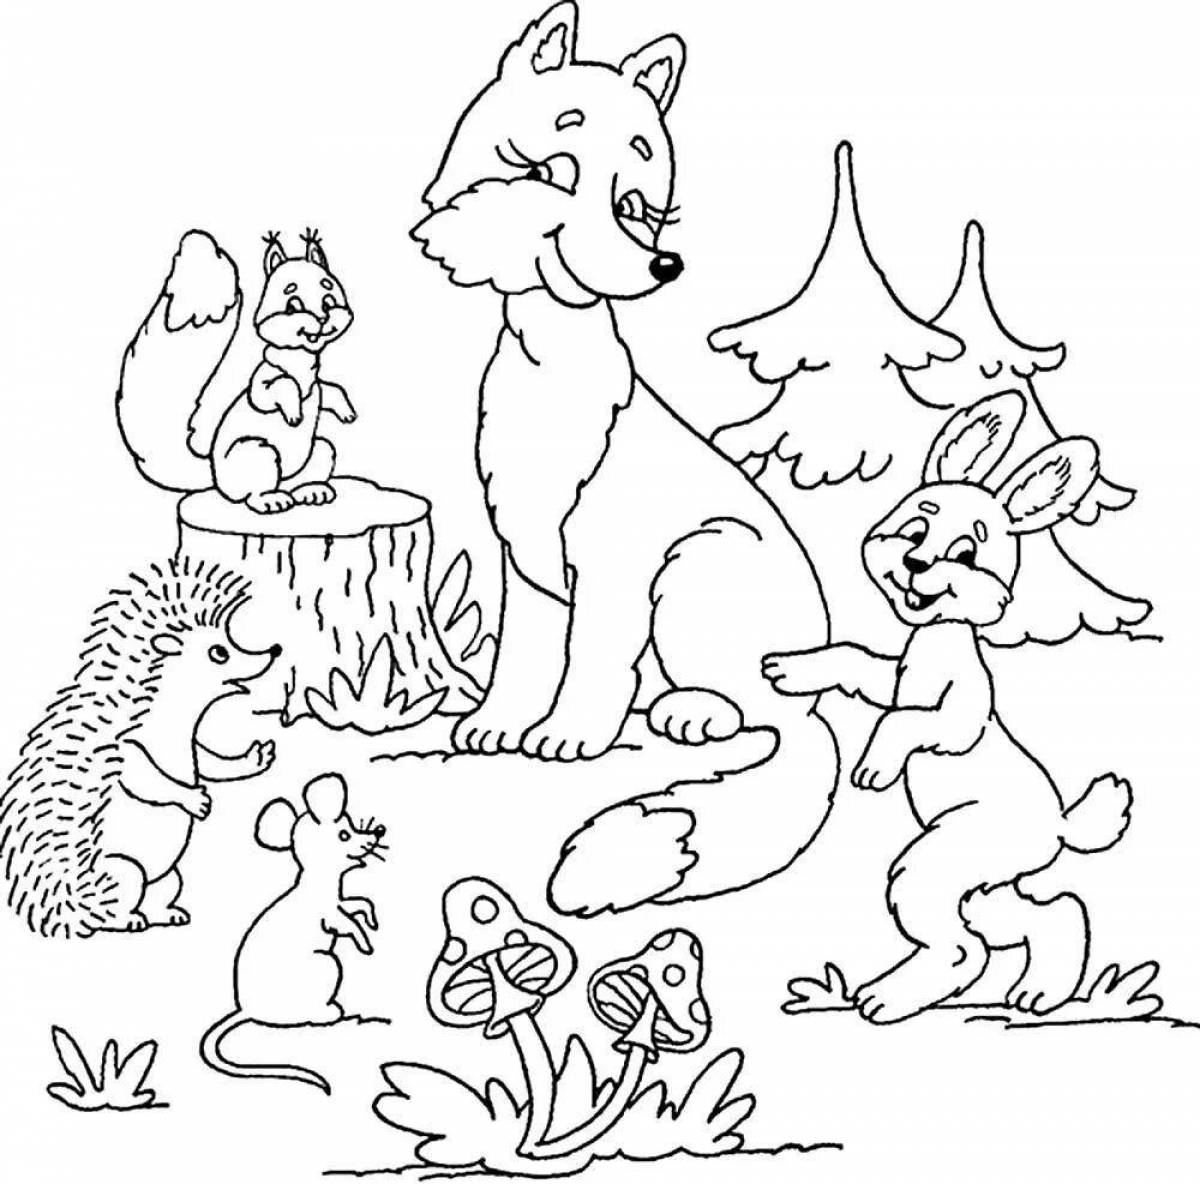 Magic wild animal coloring book for preschoolers